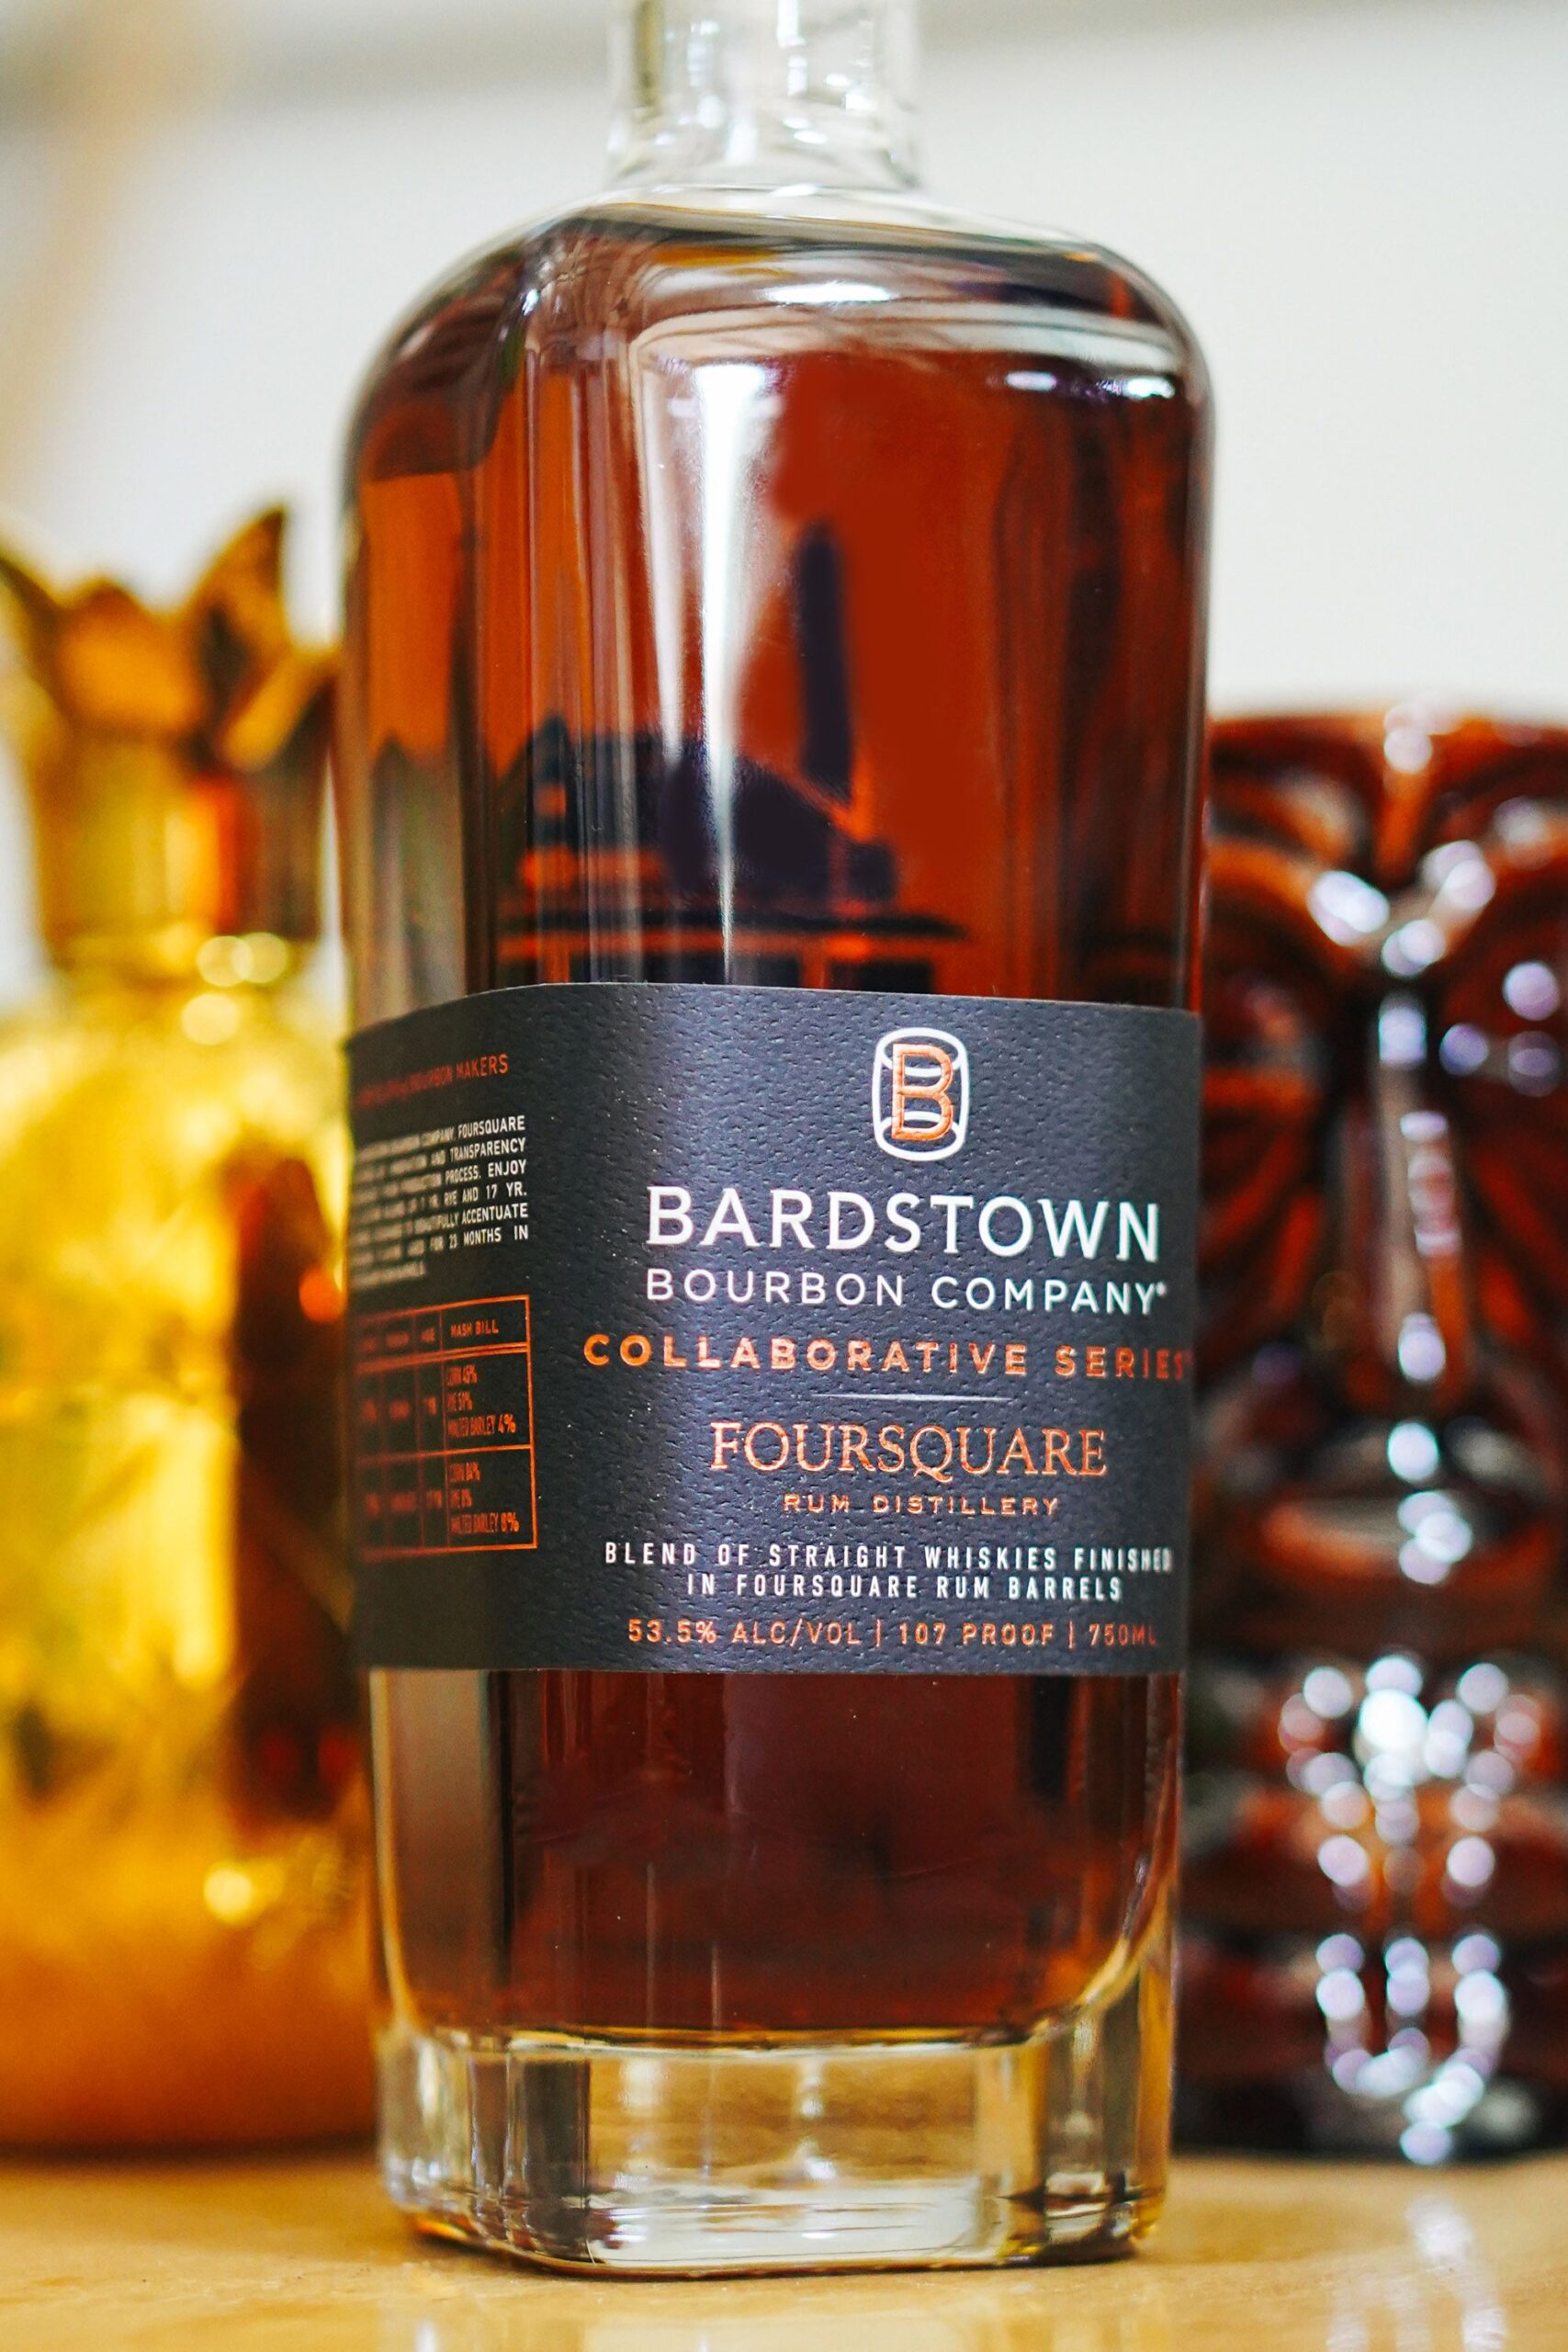 Bardstown Bourbon Company releases Foursquare Collaborative Series